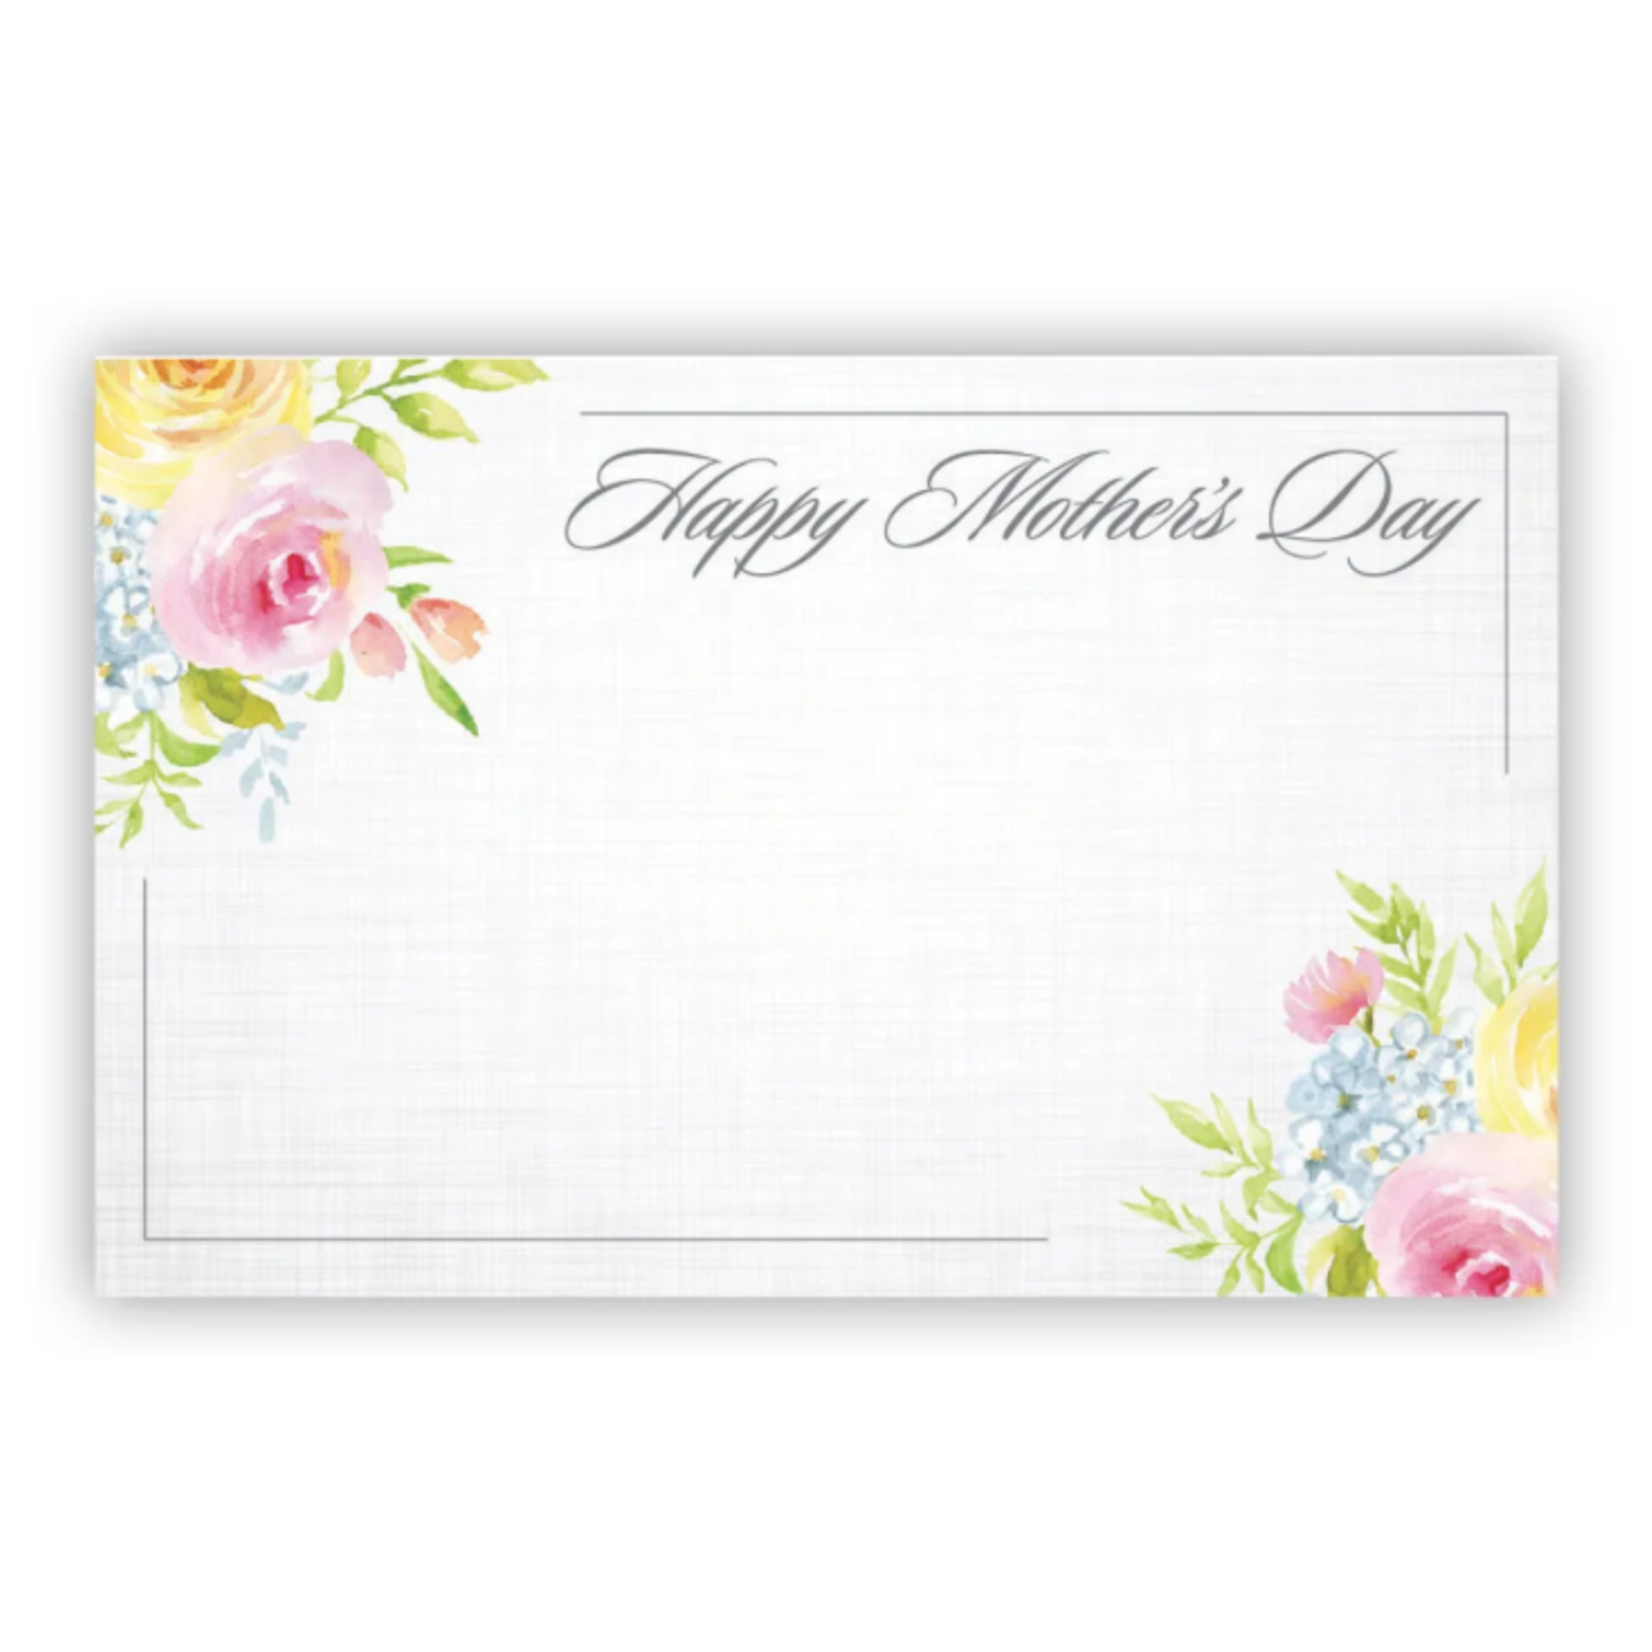 HAPPY MOTHER’S DAY CAPRI CARD